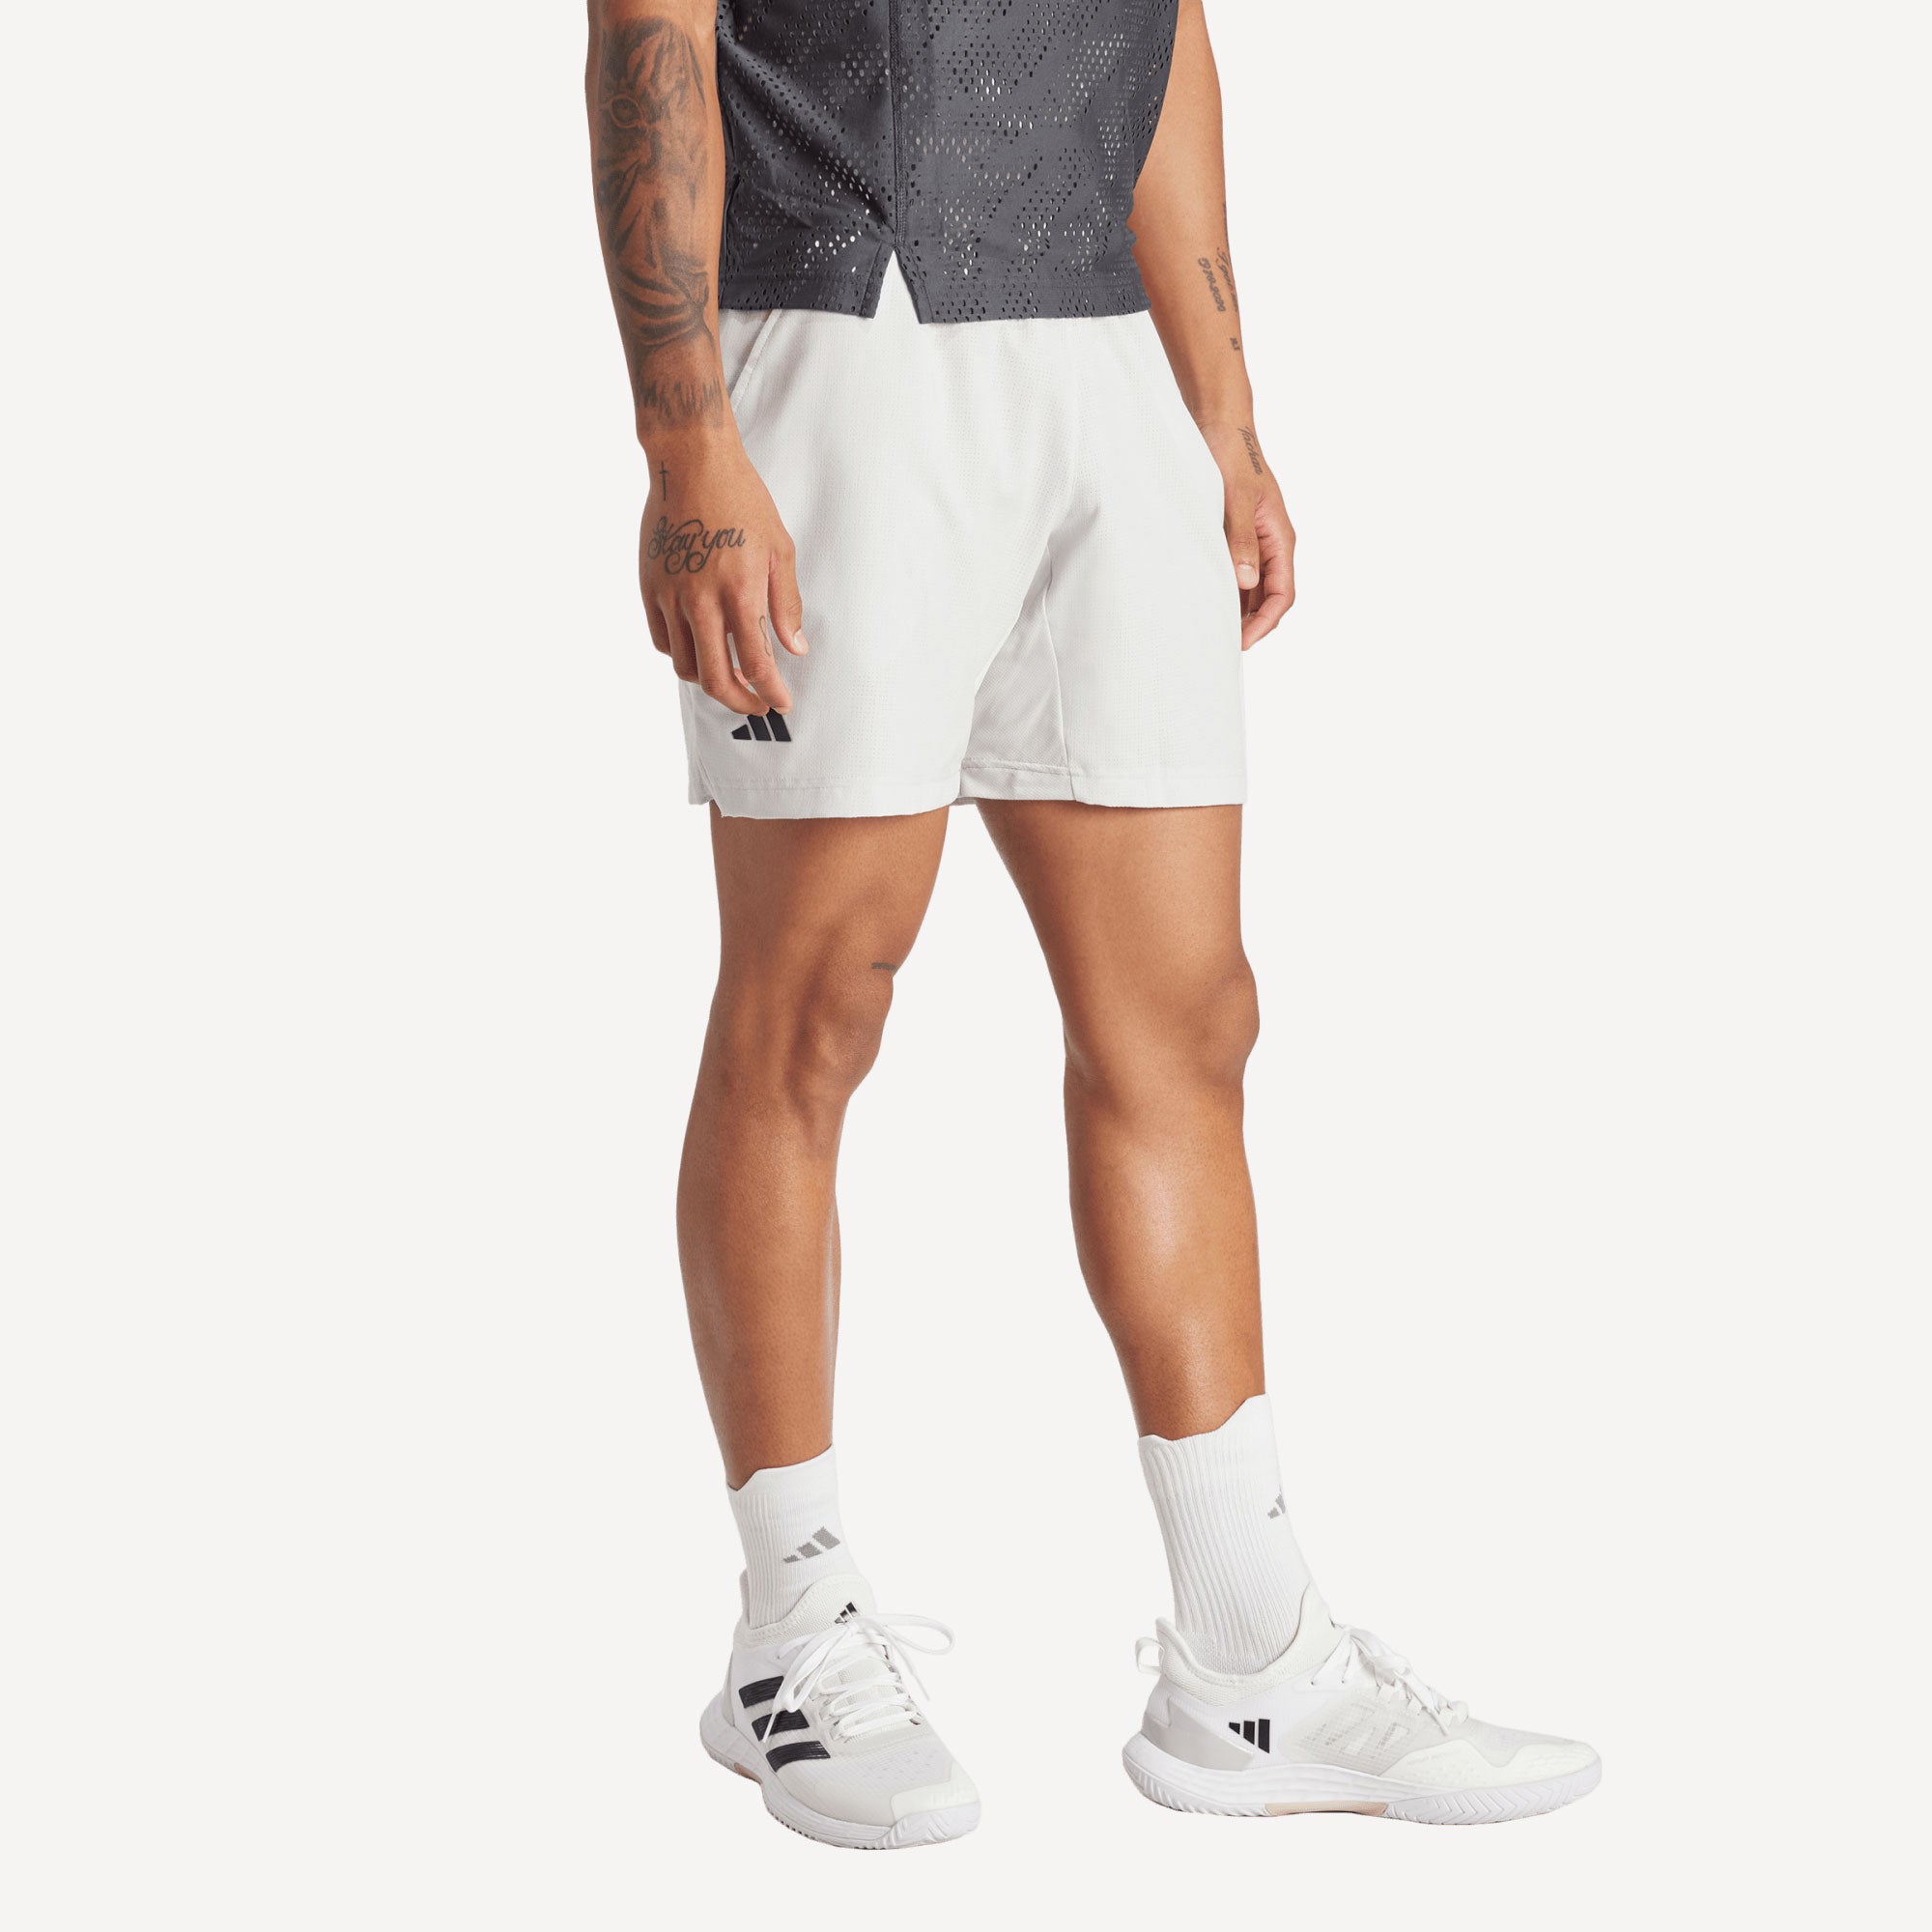 adidas Pro Melbourne Men's Tennis Shorts and Inner Shorts Set - Grey (3)